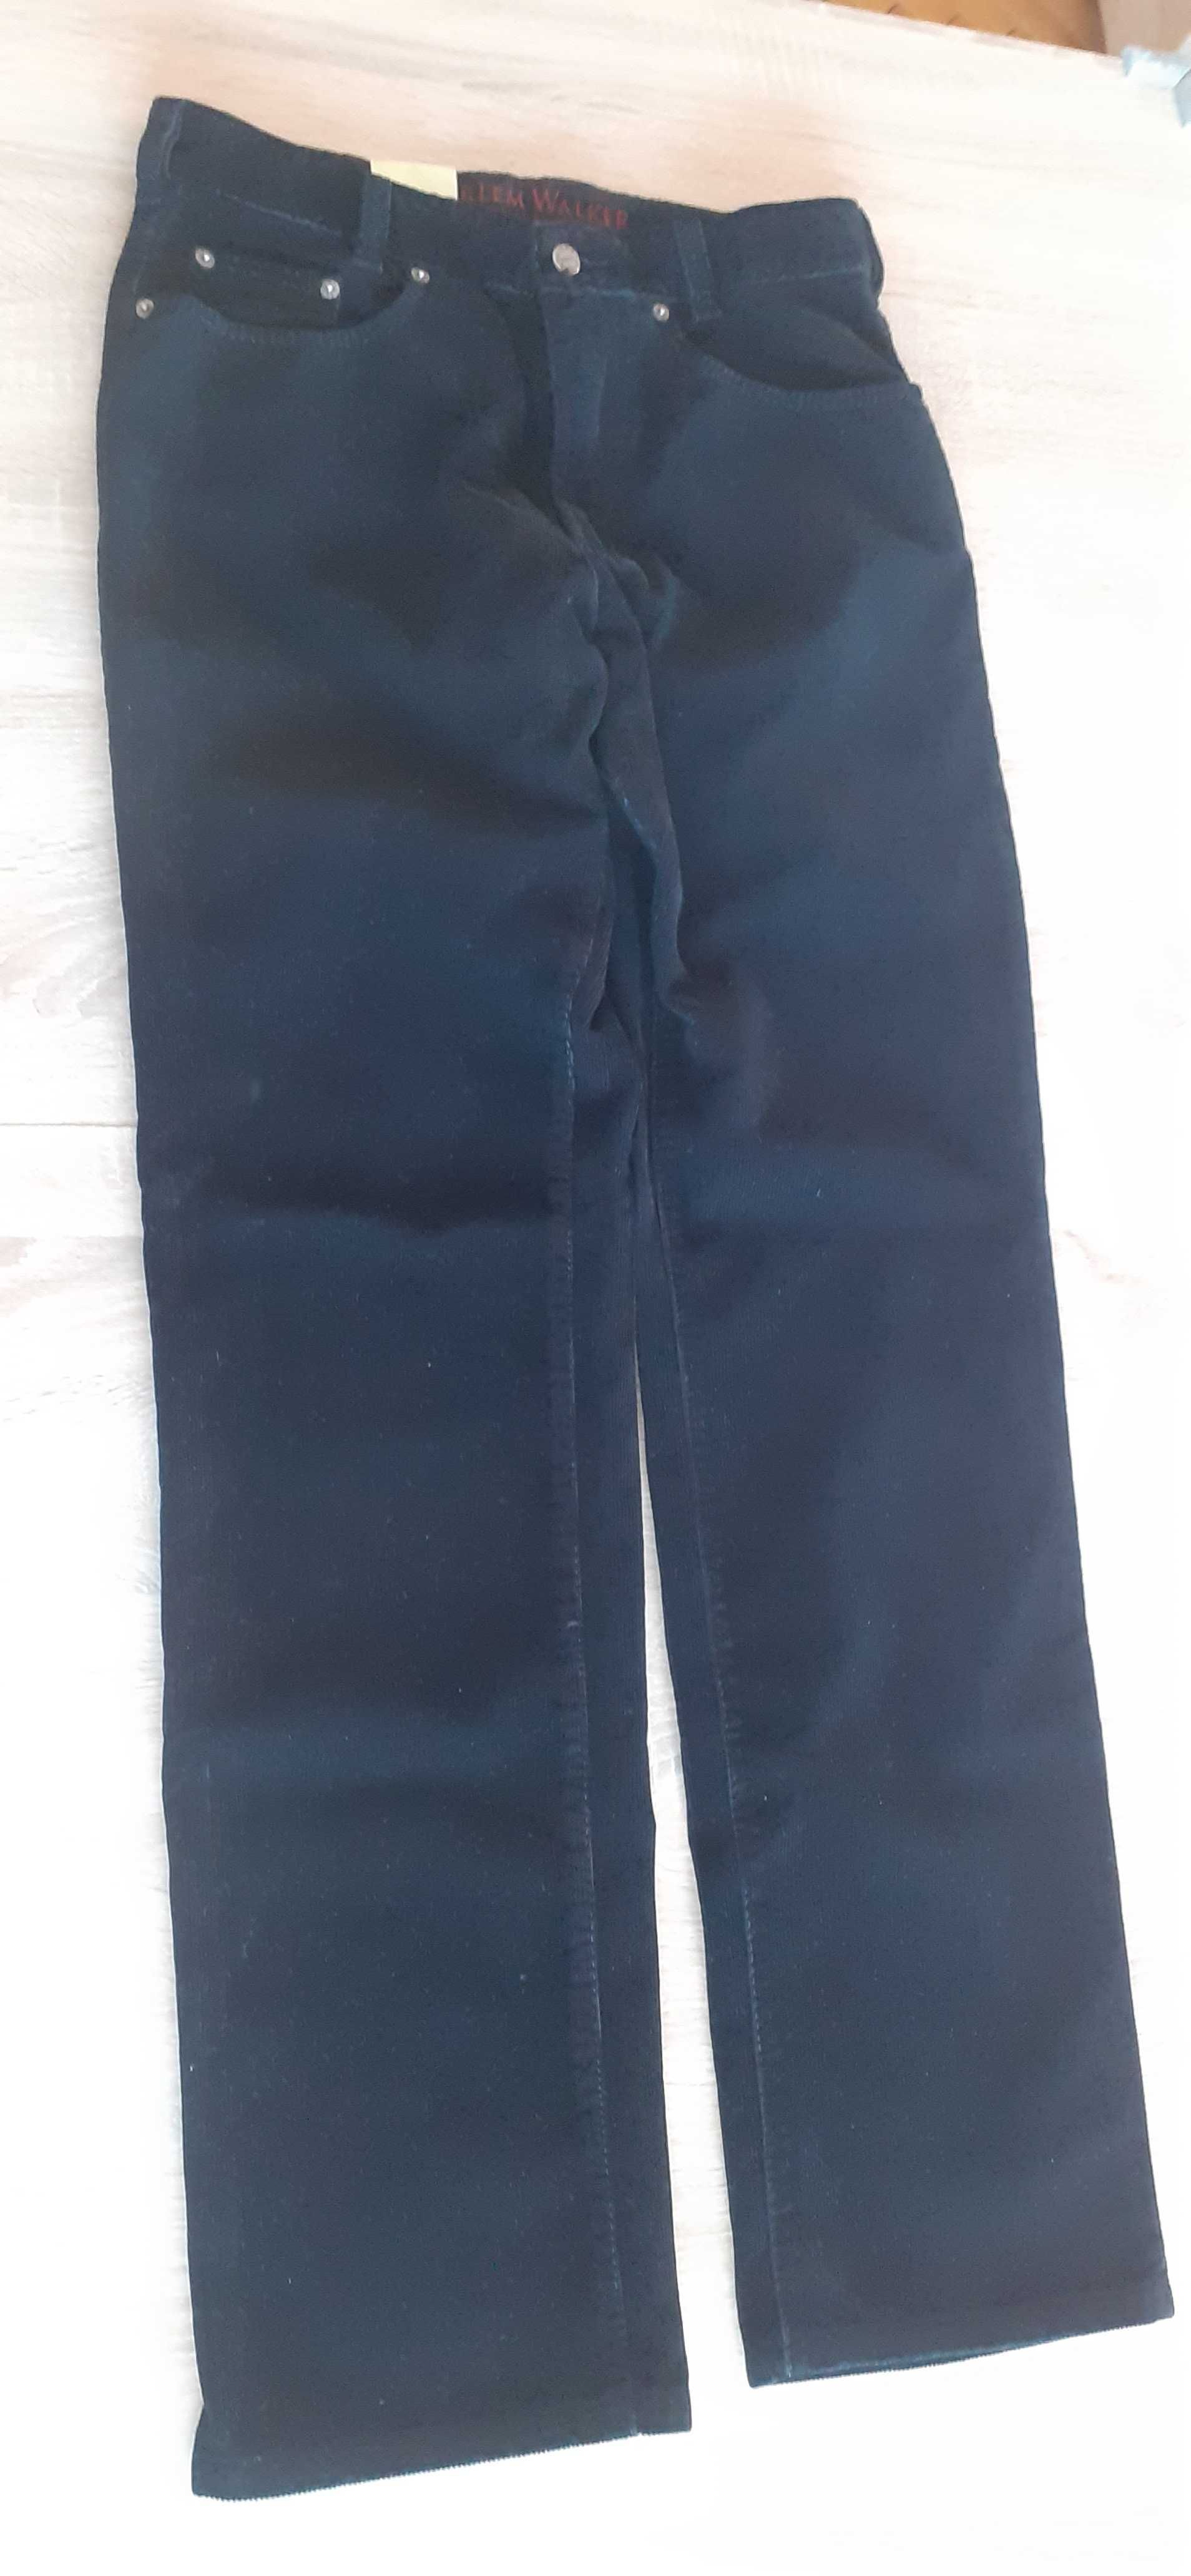 Spodnie sztruksowe JOKER HARLEM WALKER, czarne, nowe, pas-40 cm.